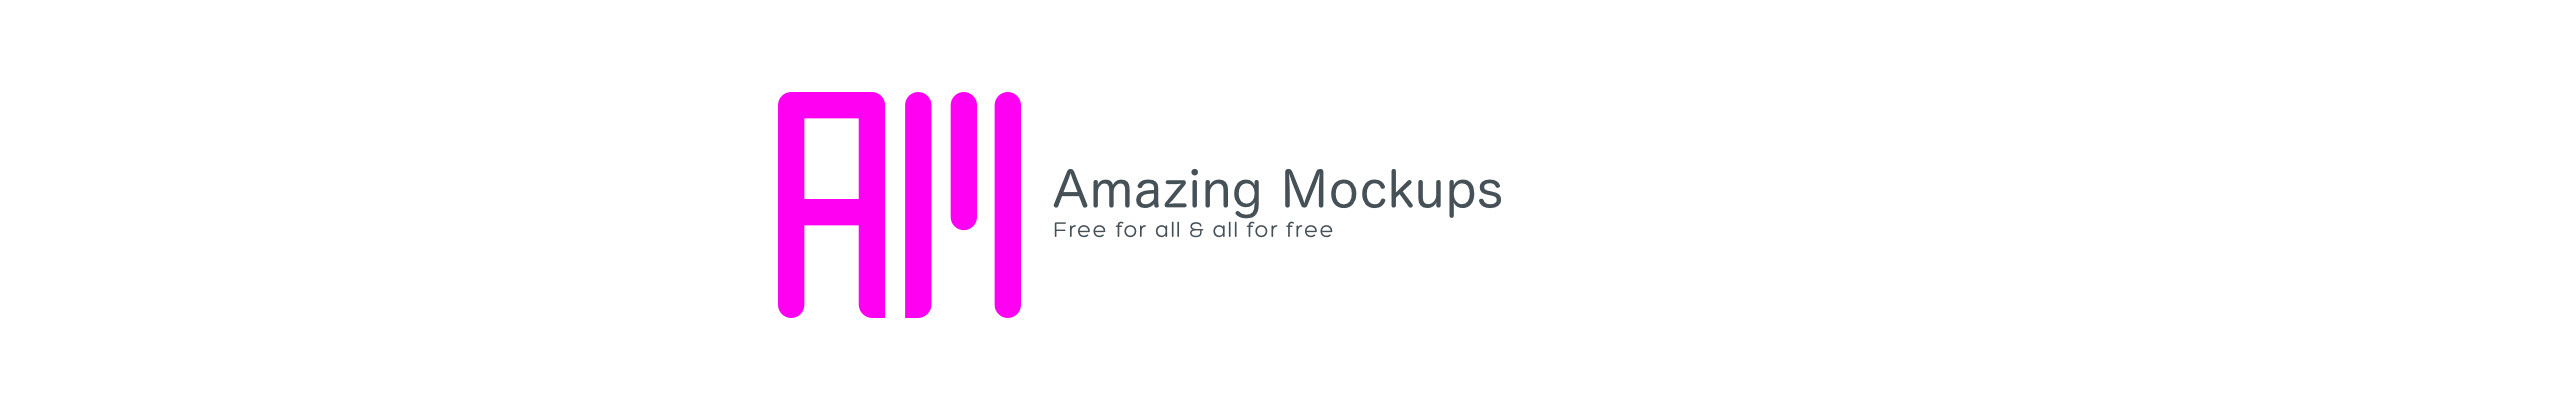 Amazing Mockups's profile banner